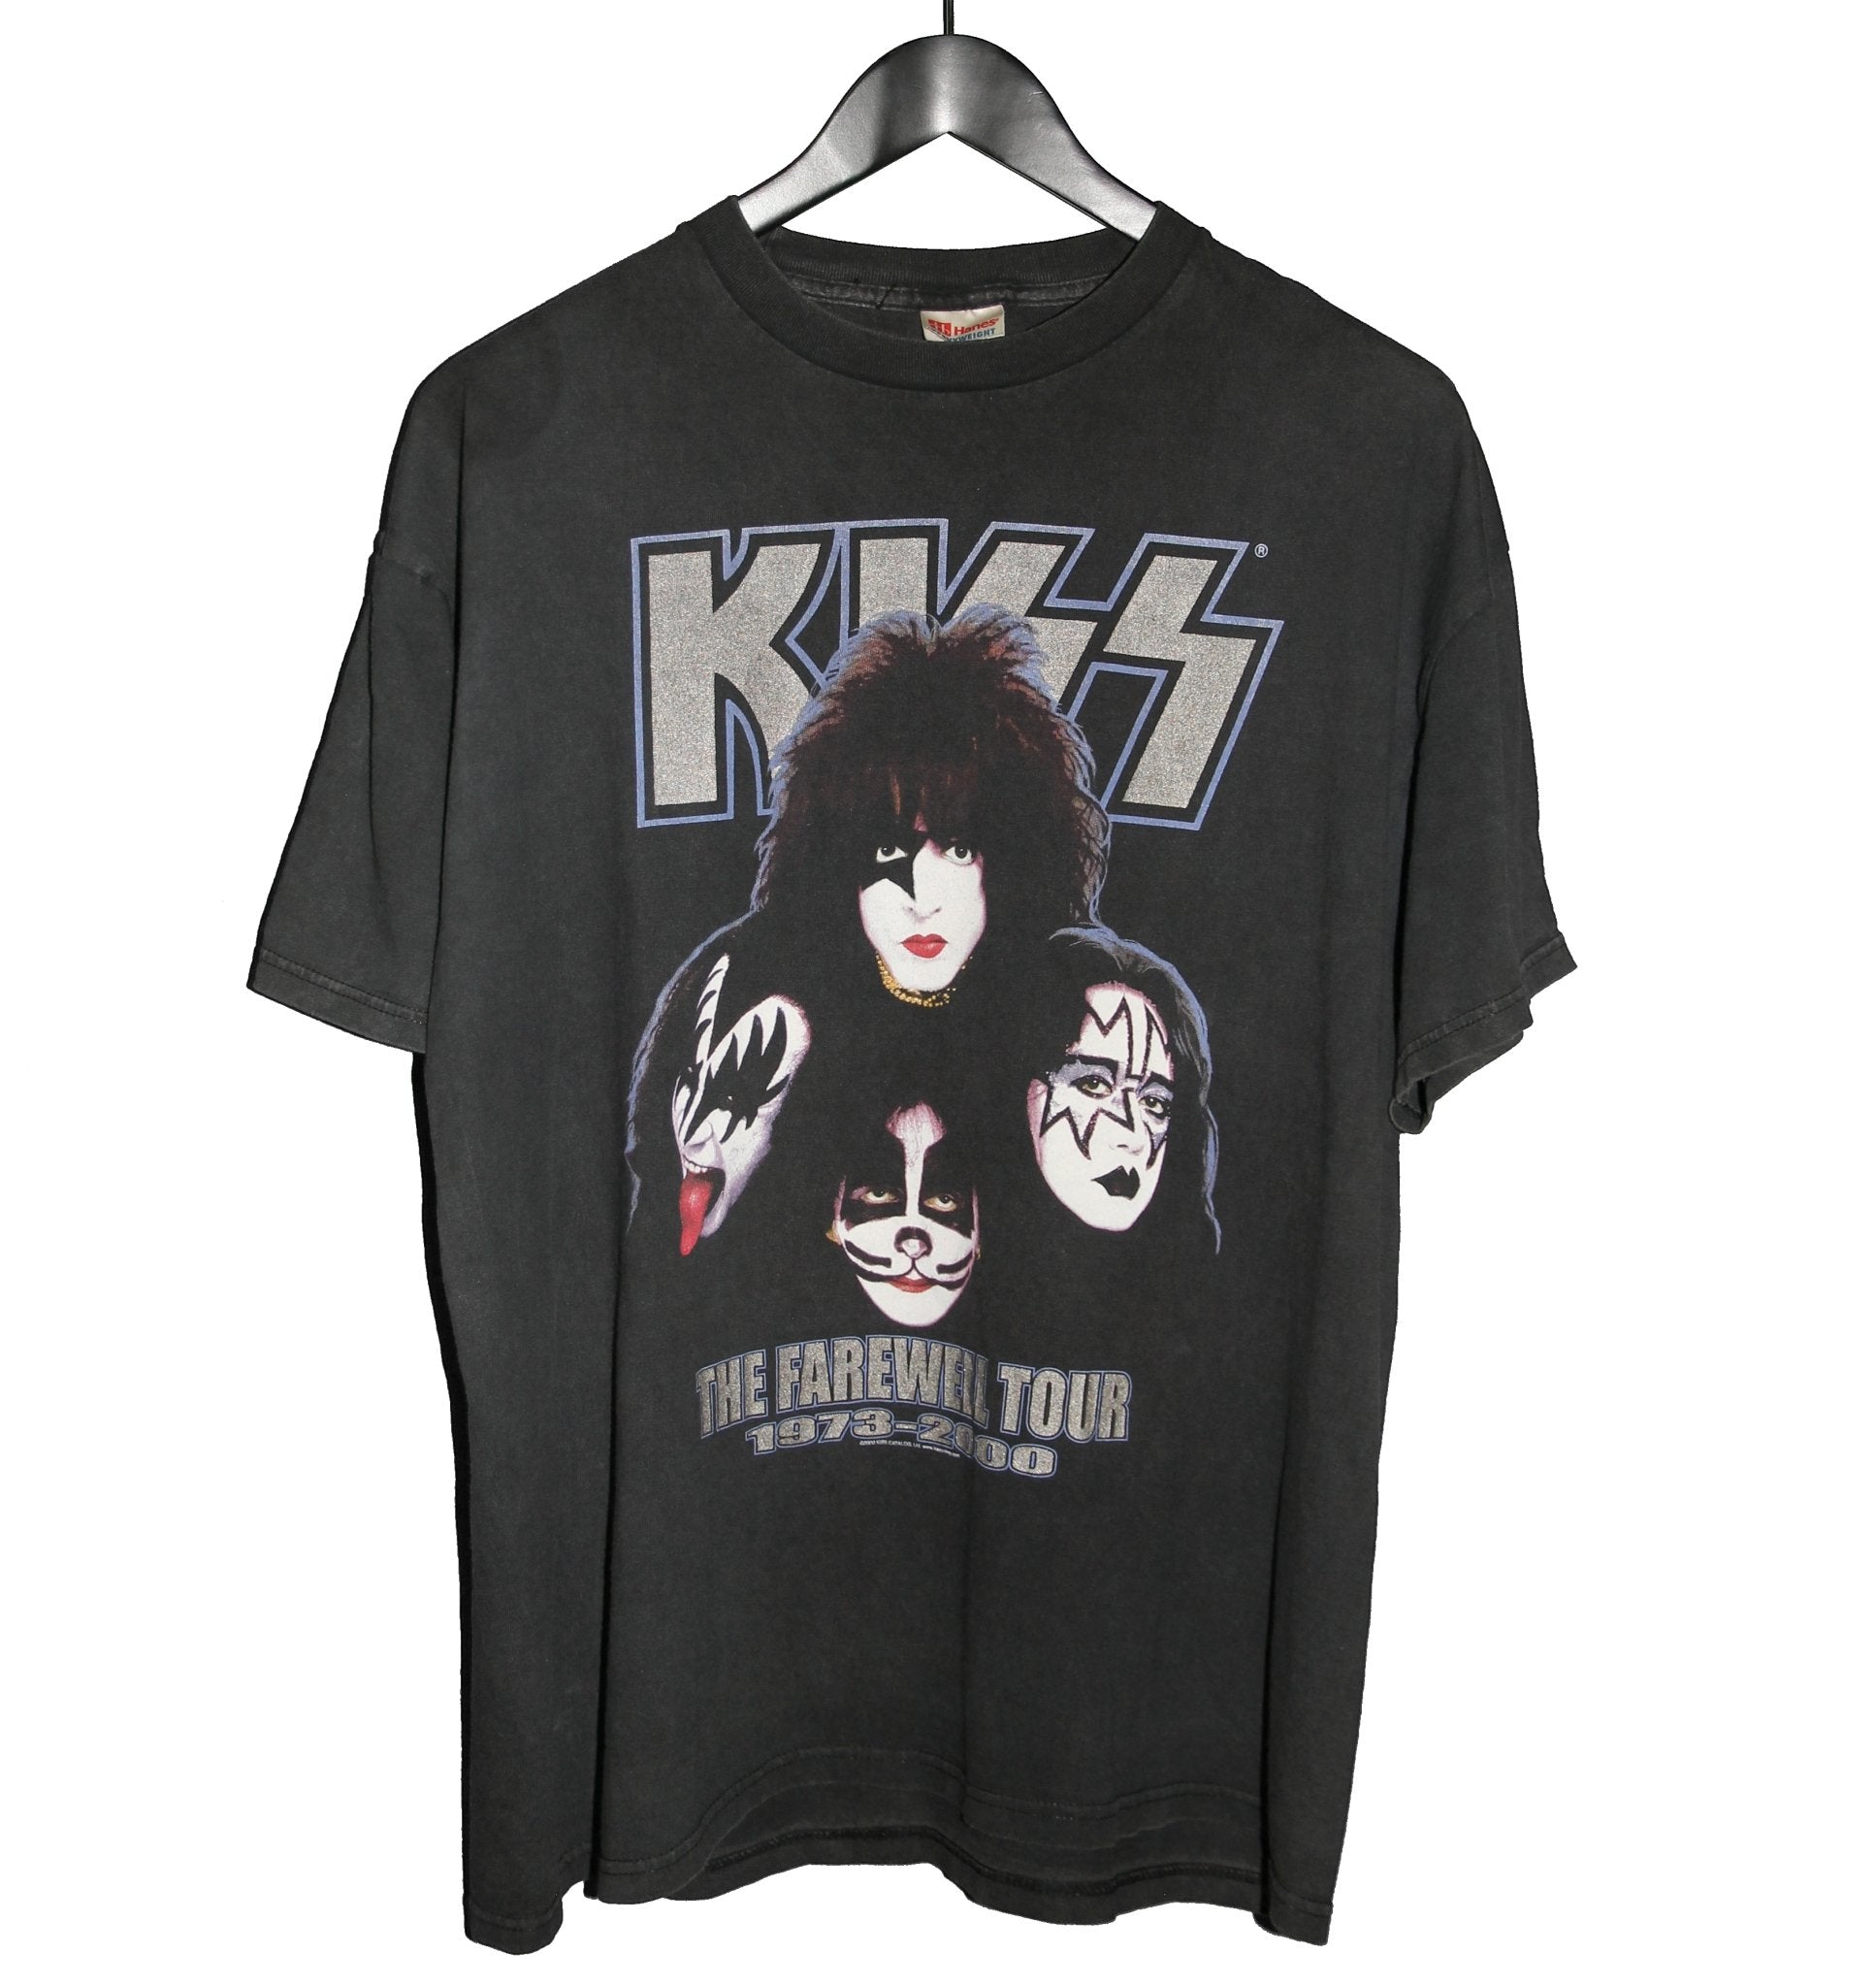 KISS 2000 Farewell Tour Shirt - Faded AU